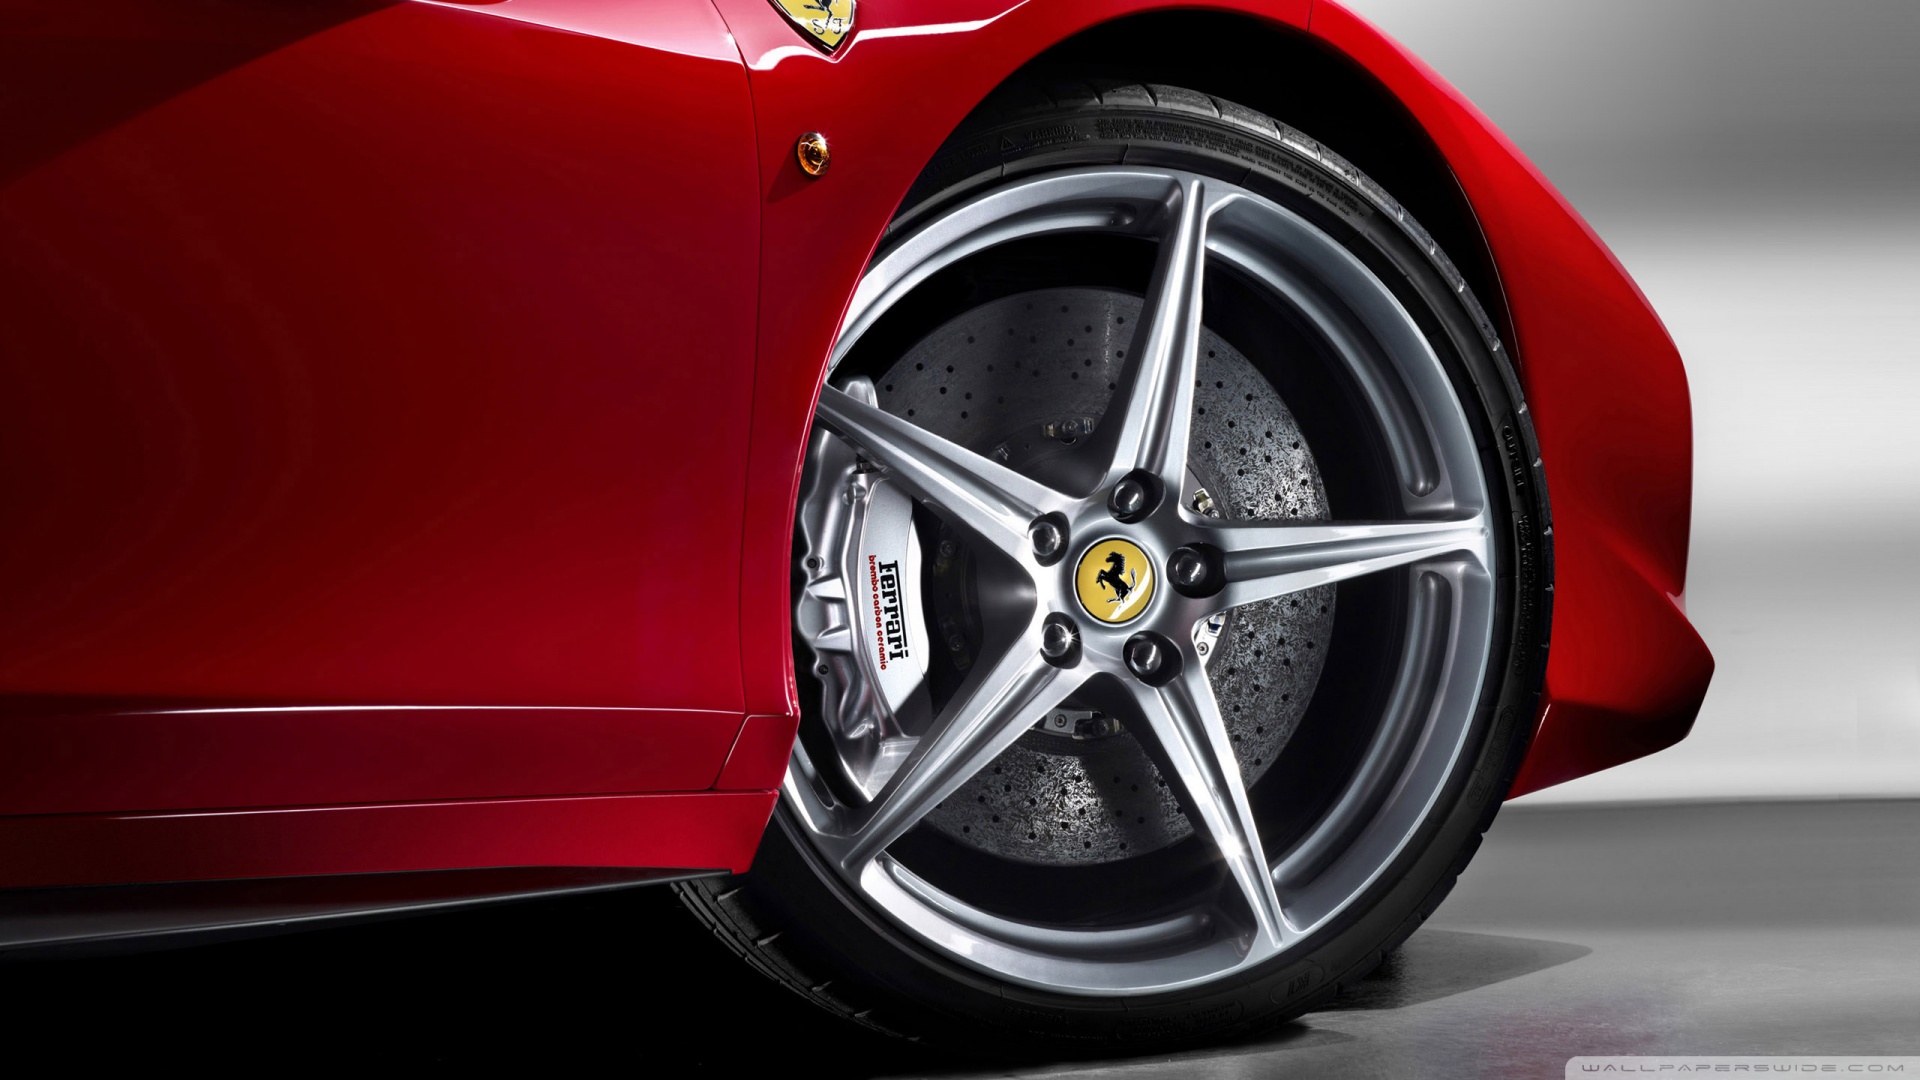 2010 Ferrari 458 Italia Wheel Wallpaper - Ferrari The Race Experience Wii - HD Wallpaper 